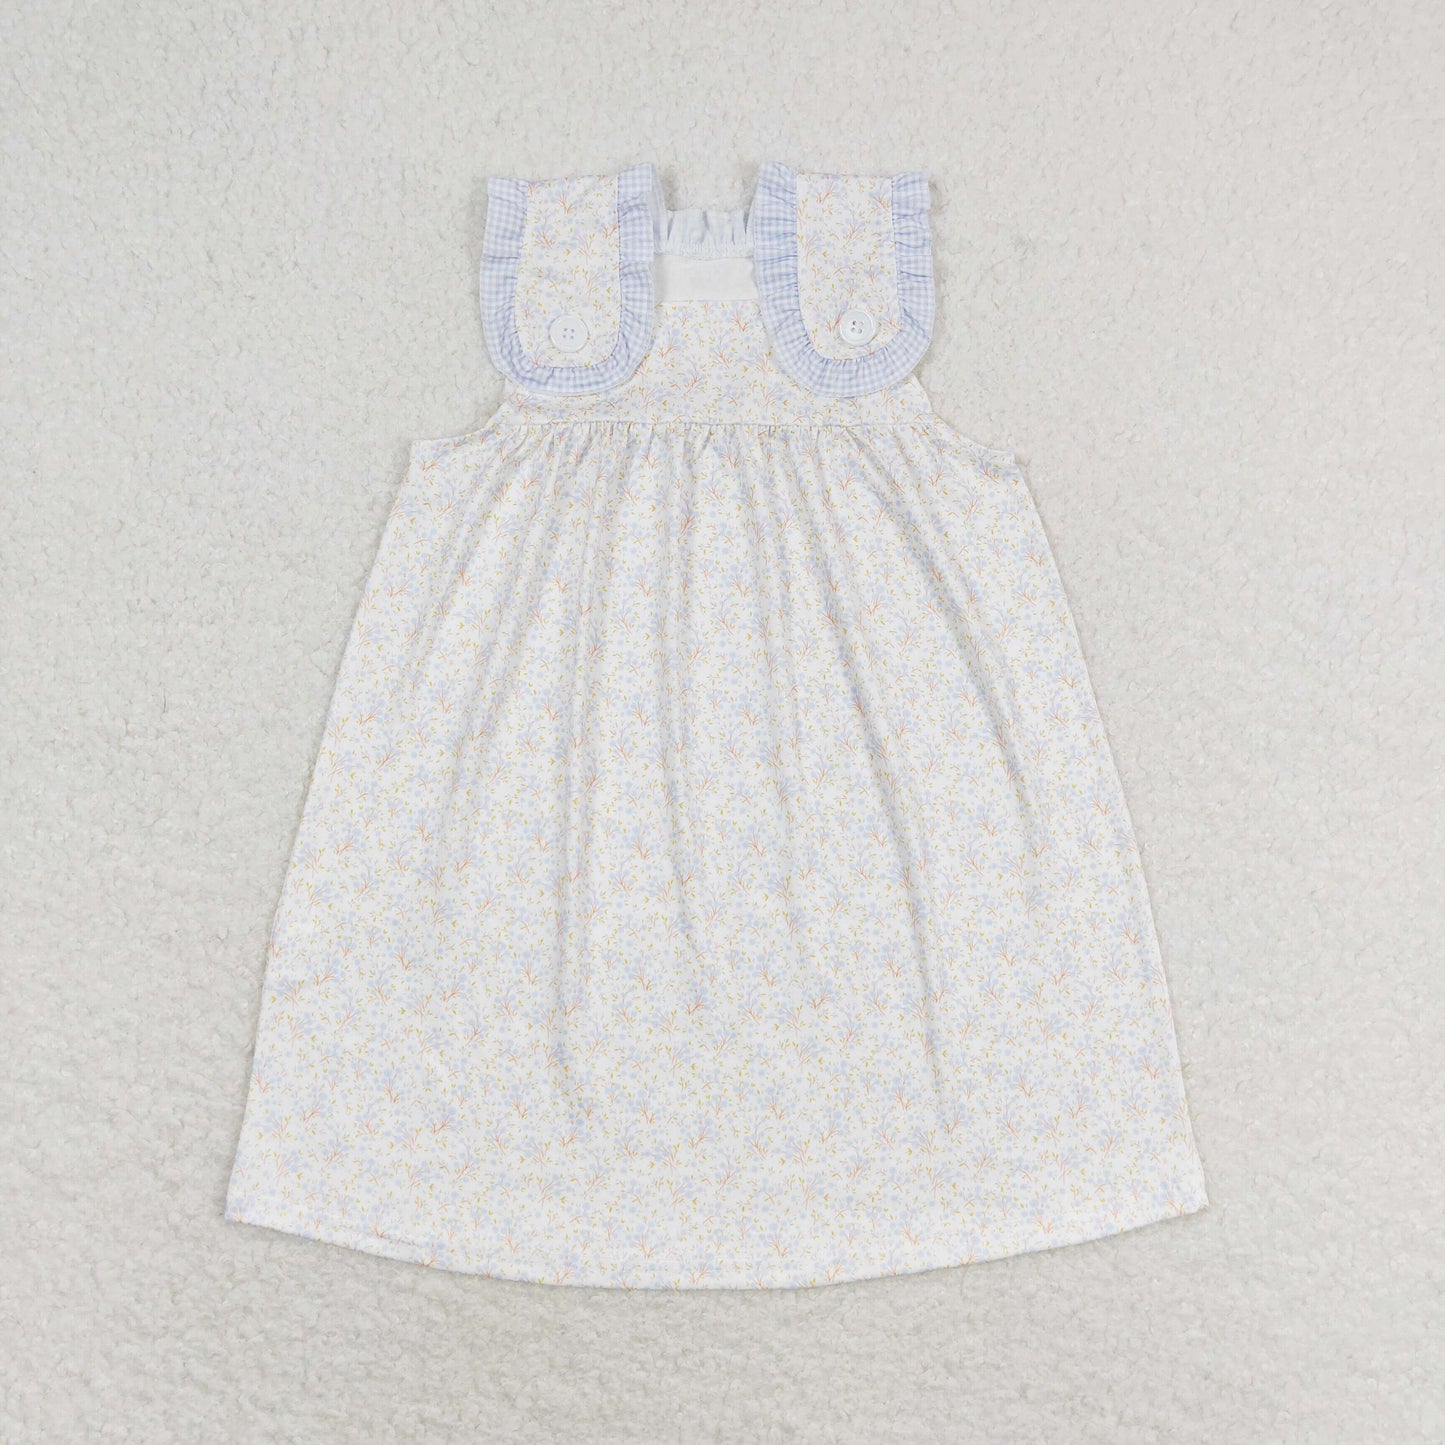 GSD1046 Baby girl summer clothes sleeveless top kids dress